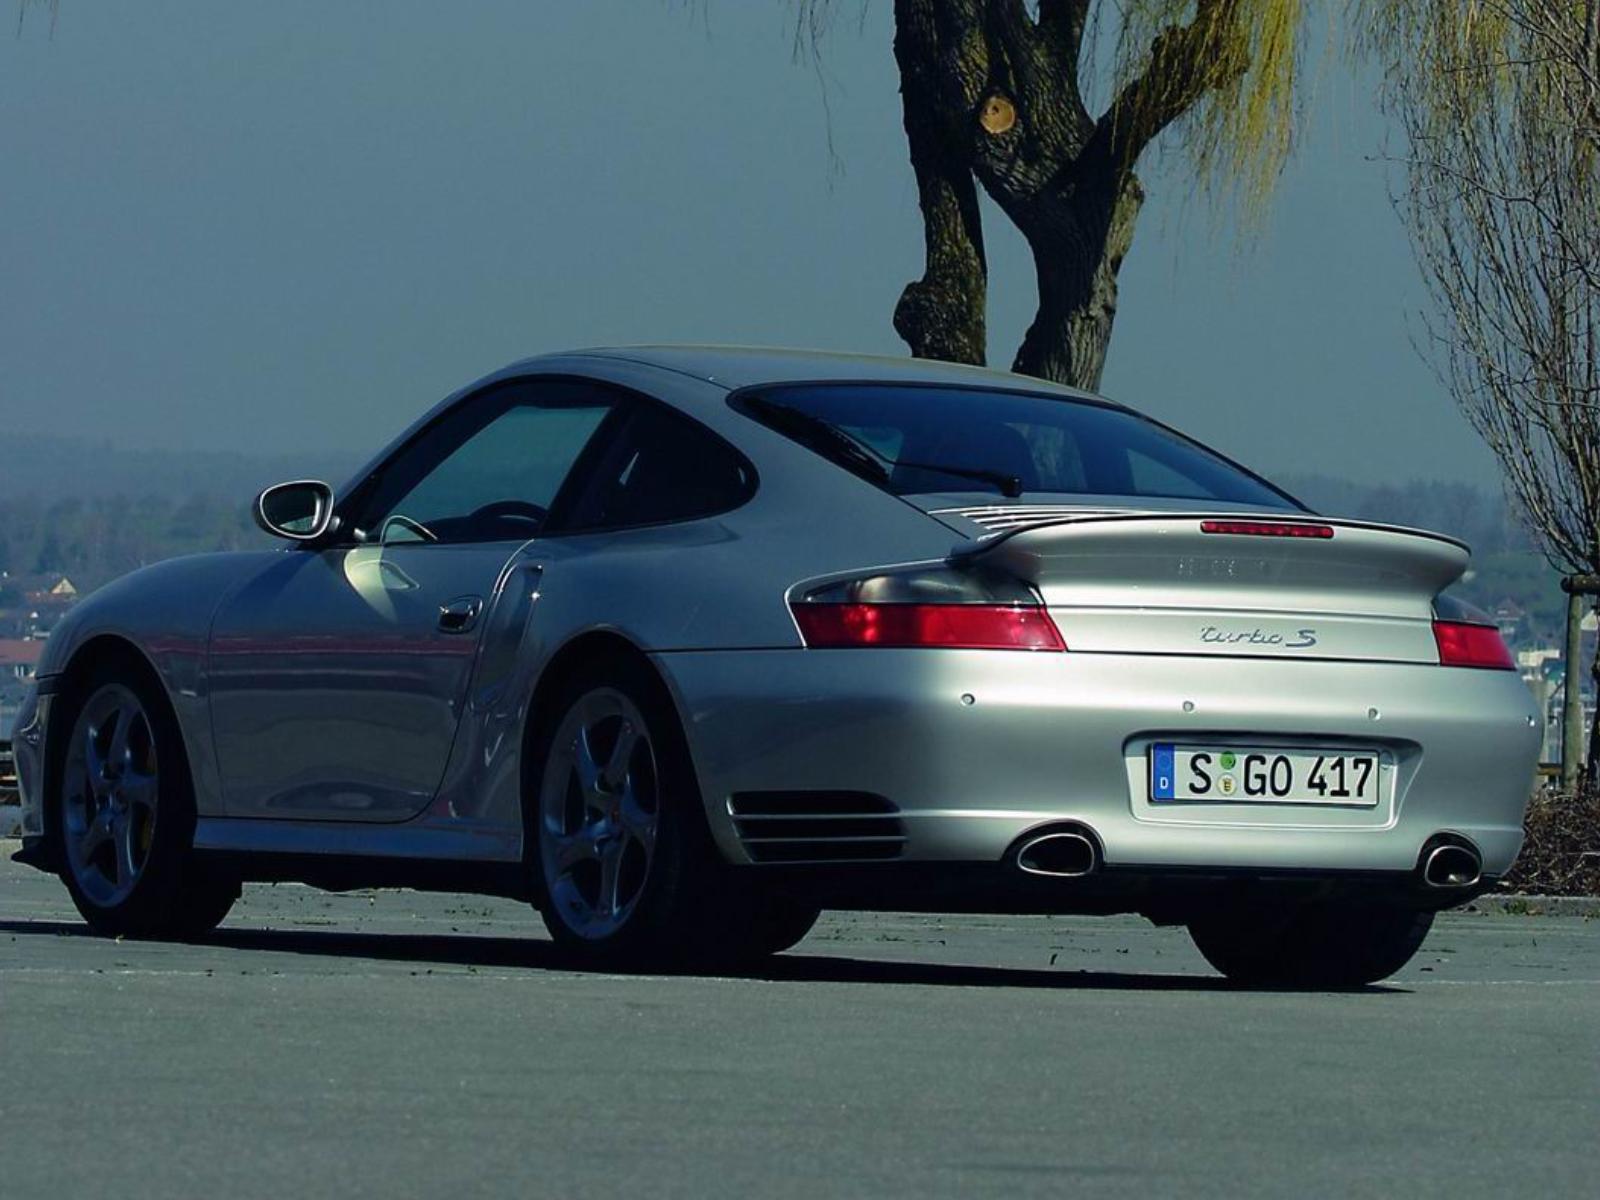 Porsche+996+911+Turbo+S+Cars+Wallpapers+(2).jpg